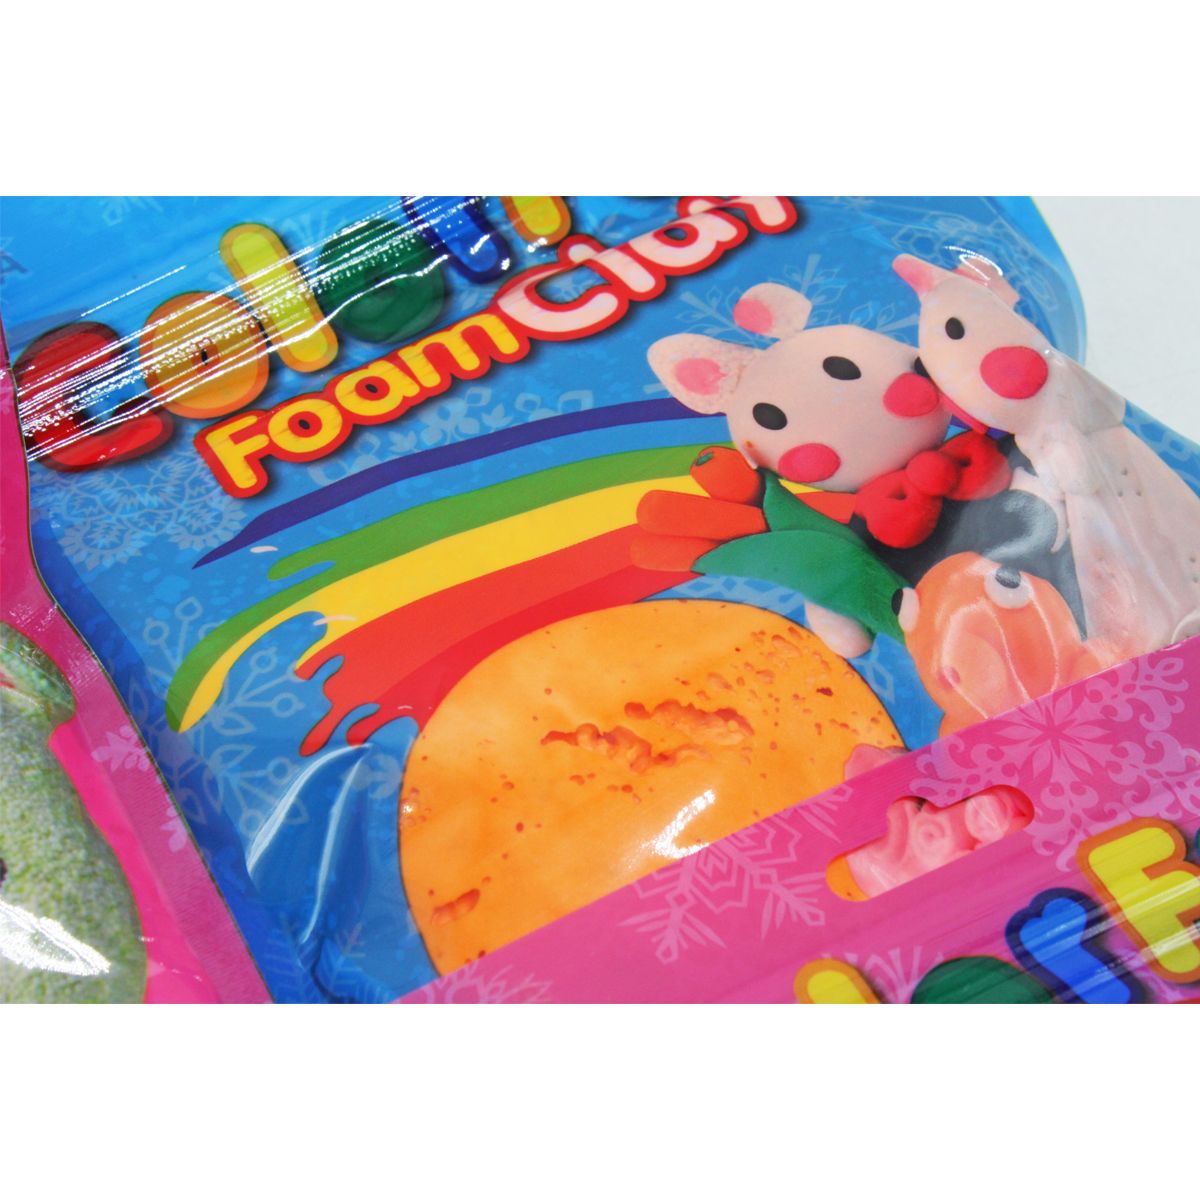 Воздушный пластилін у пакетах "Color Fun" (6 пакетов)